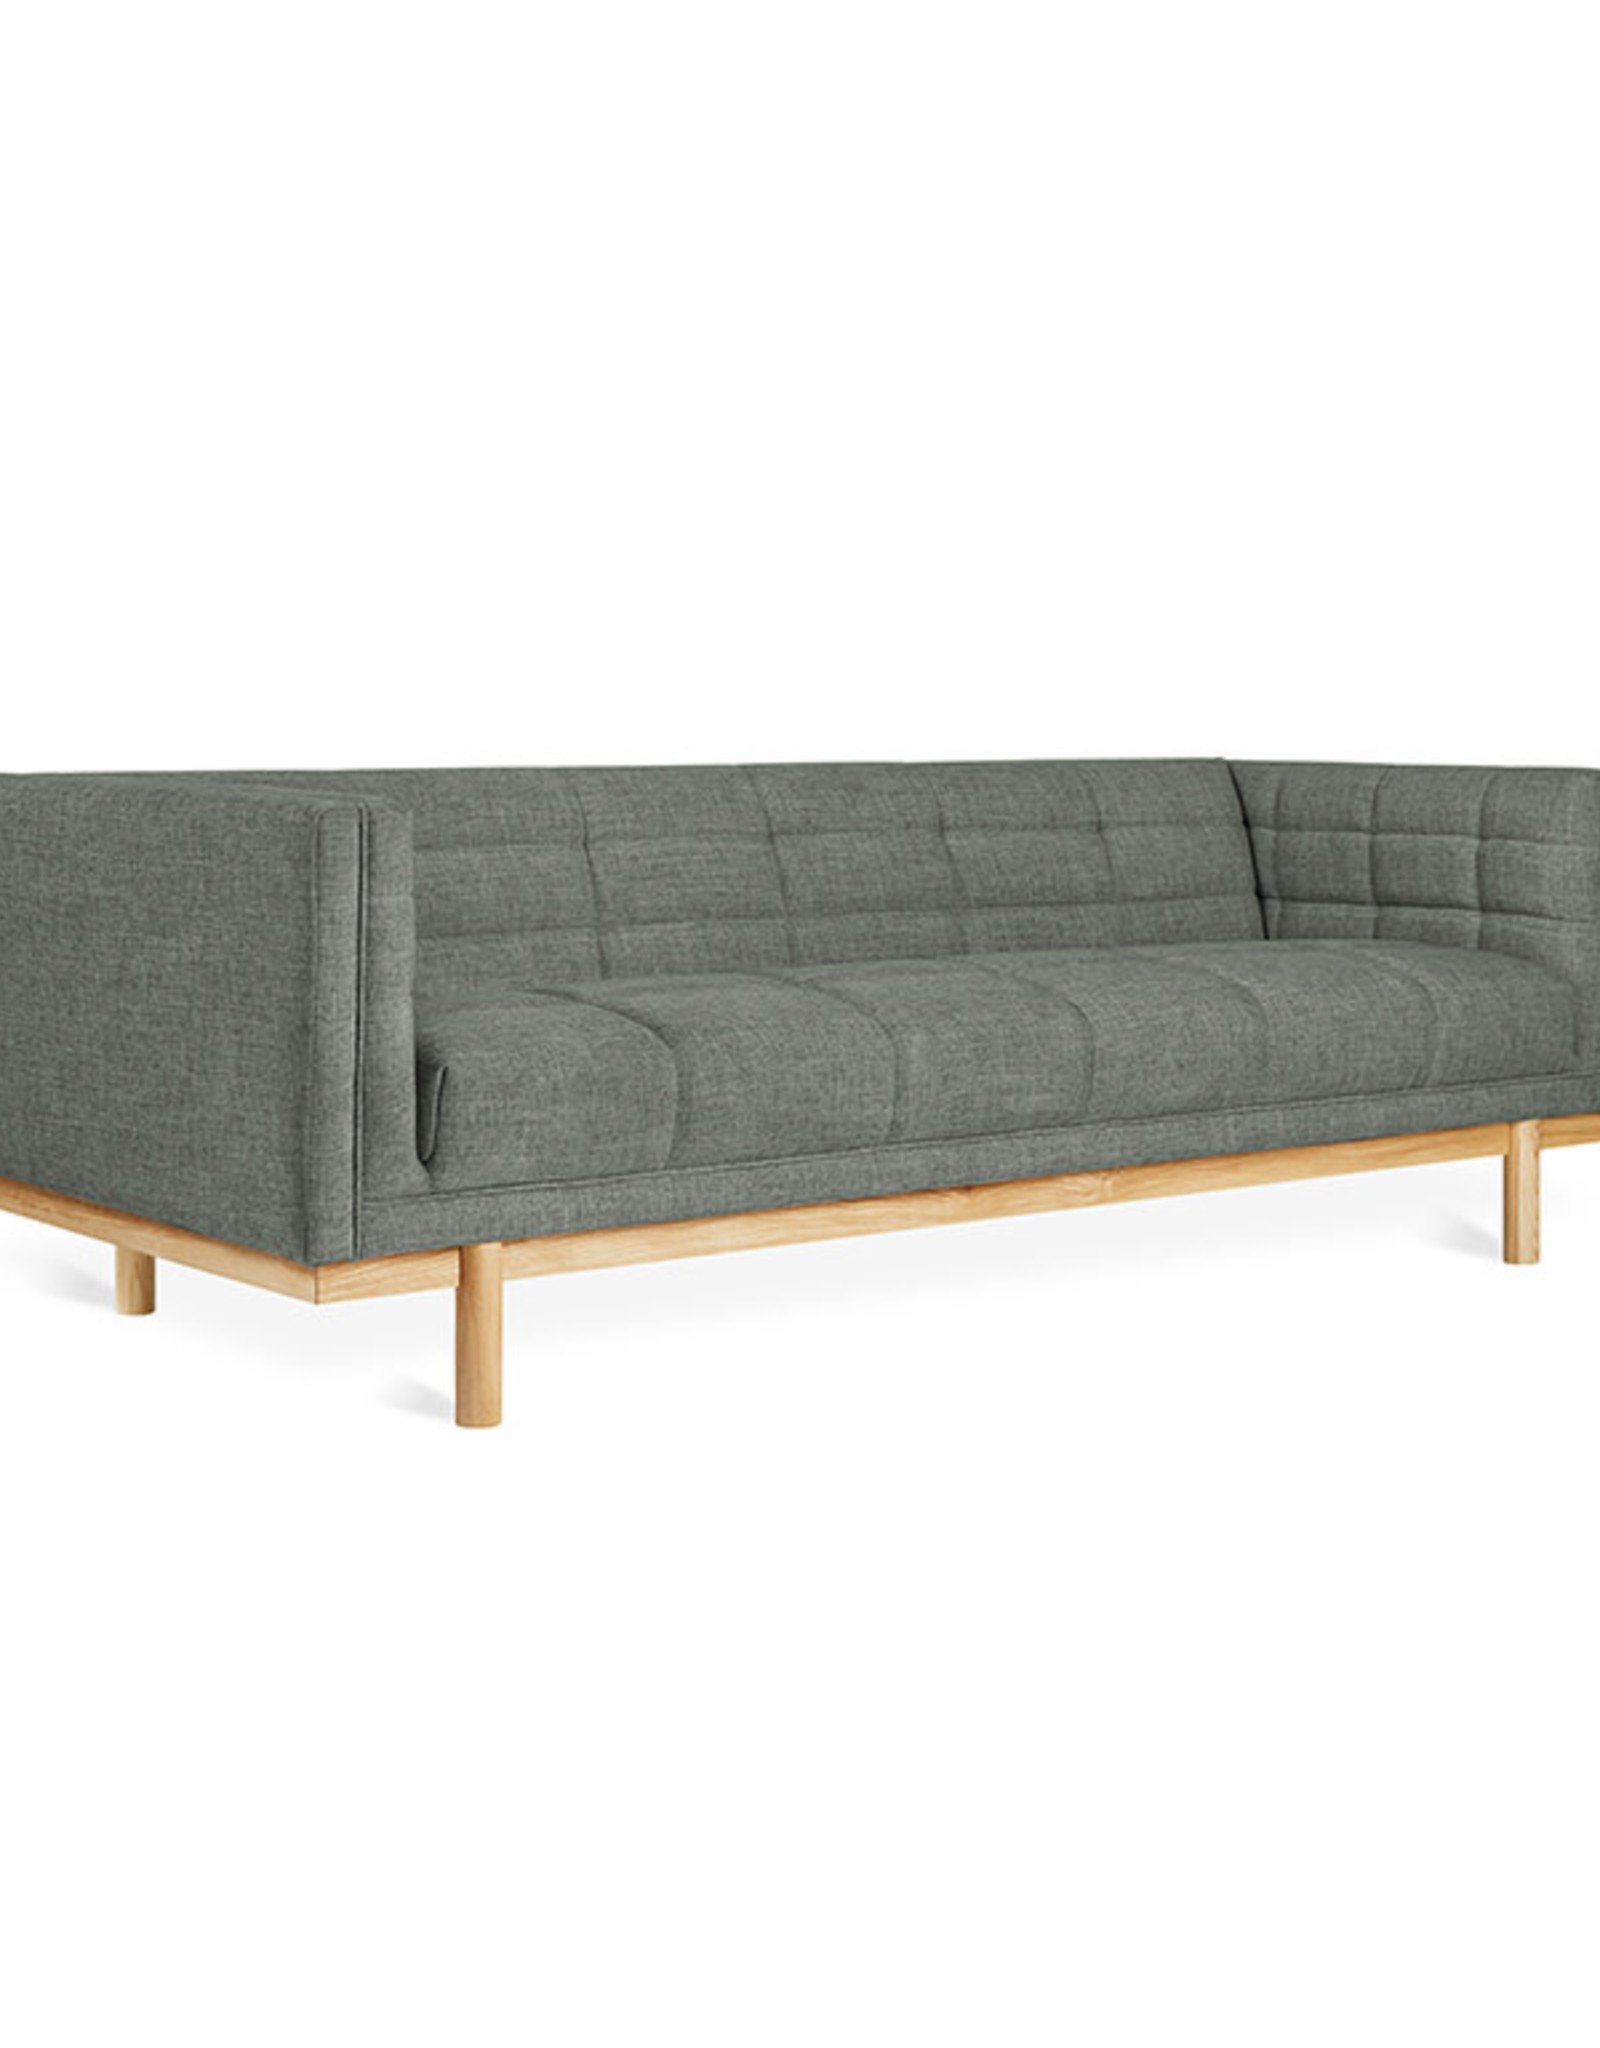 Gus* Modern Mulholland Sofa